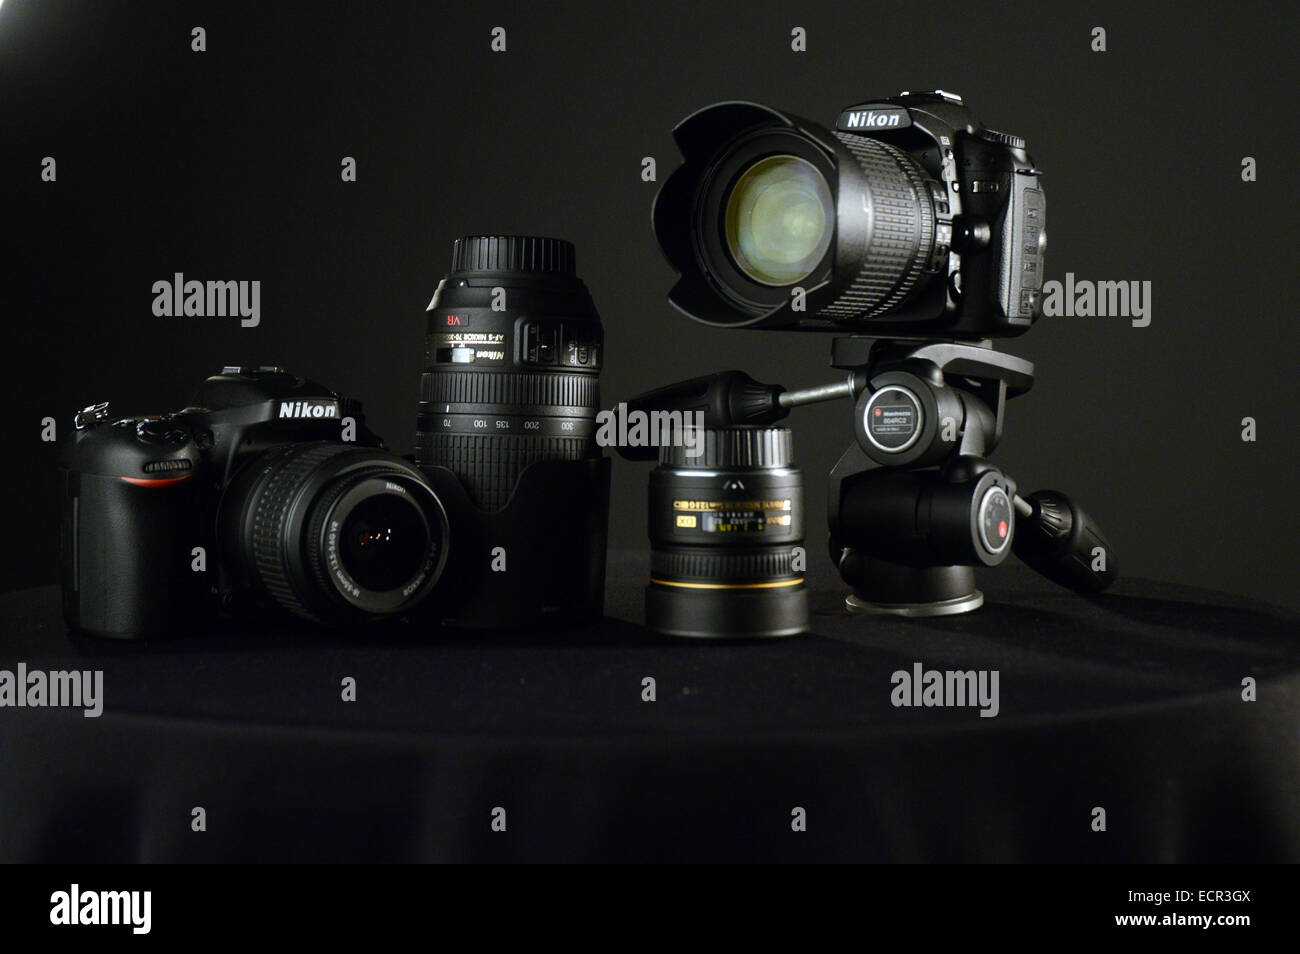 Cameras Nikon D90, Nikon d7000, lenses on black background Stock Photo